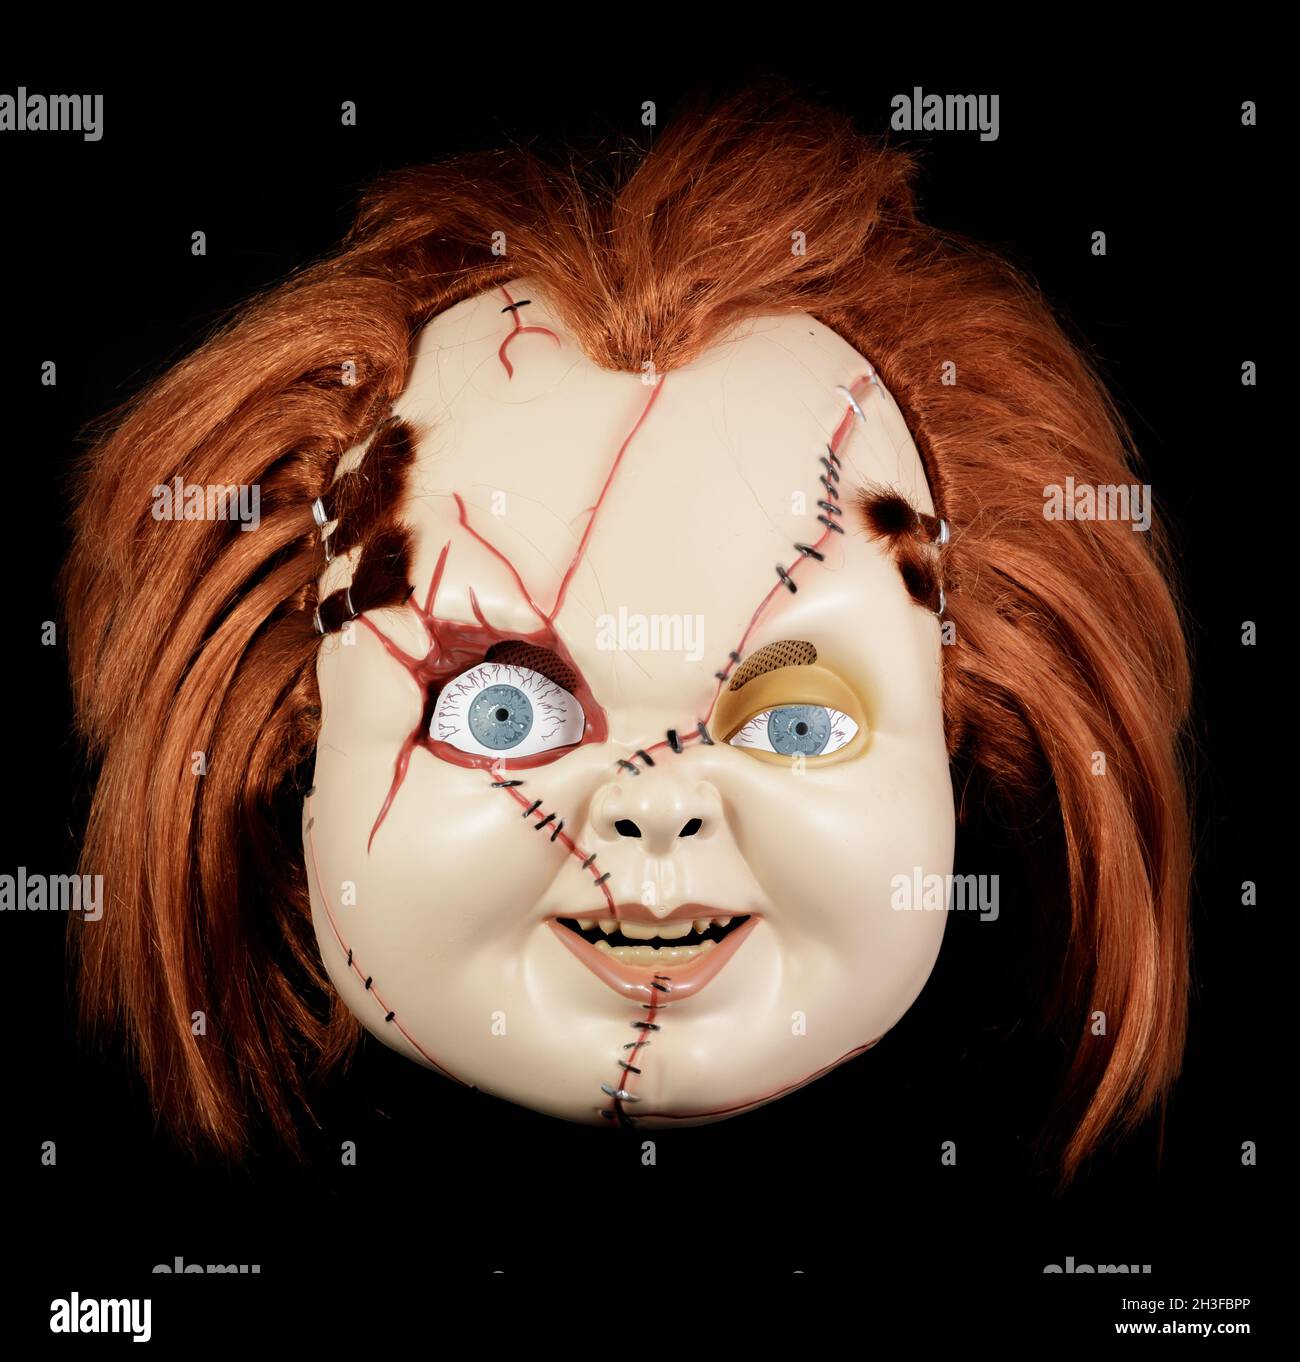 Genähte Chucky Maske aus Child's Play Slasher Film Franchise. Stockfoto